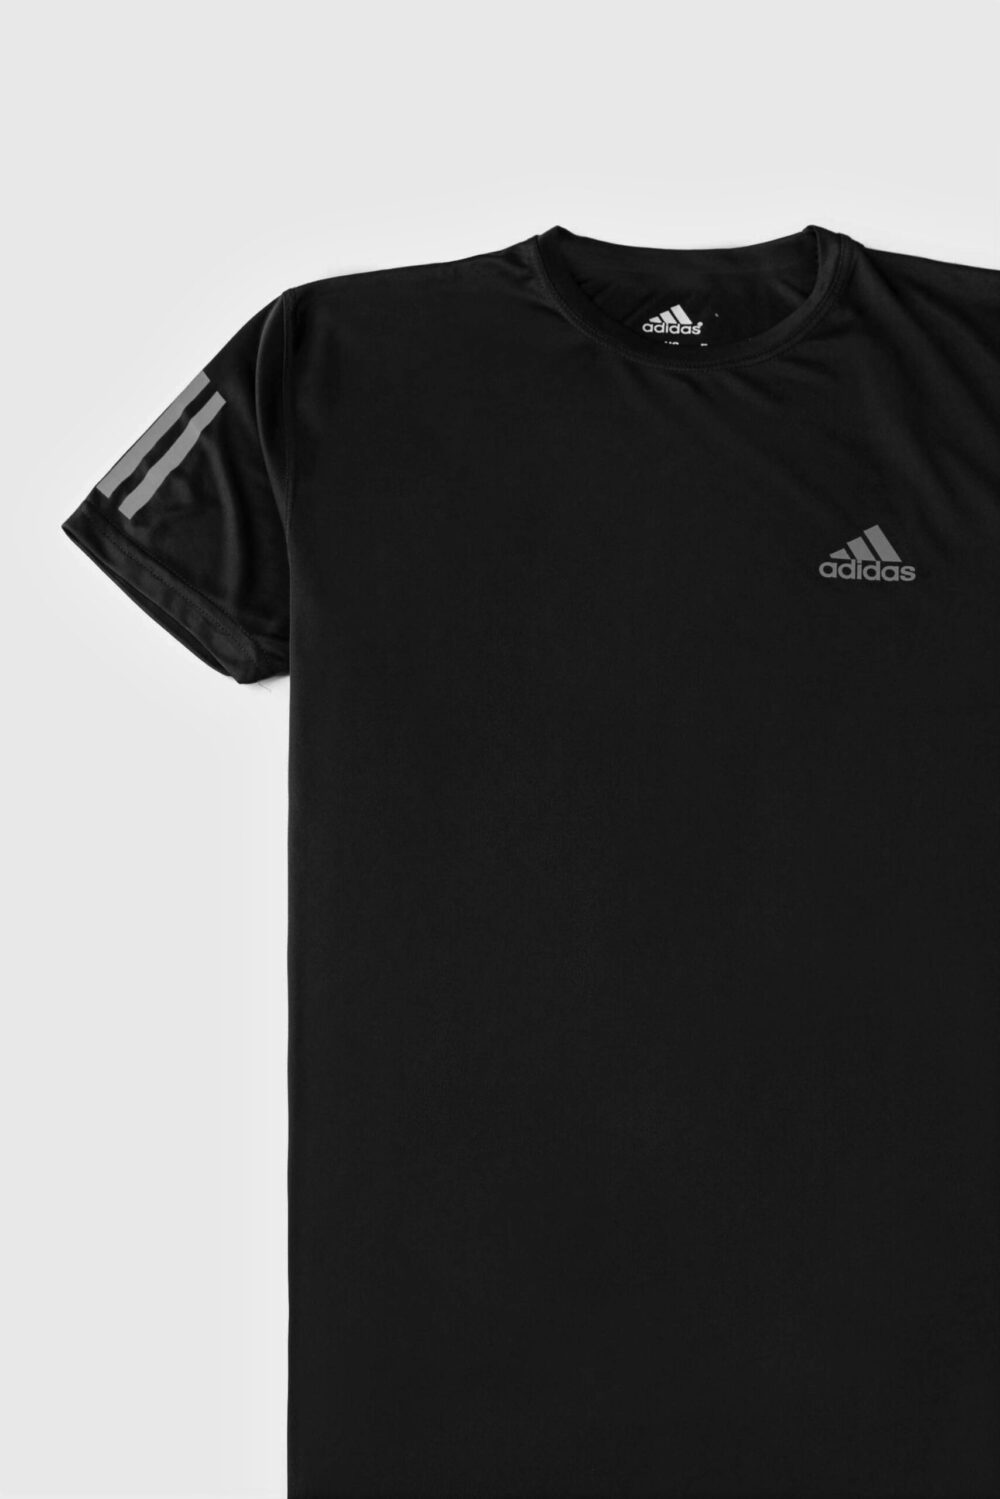 Adidas Premium Sports T Shirt – Black